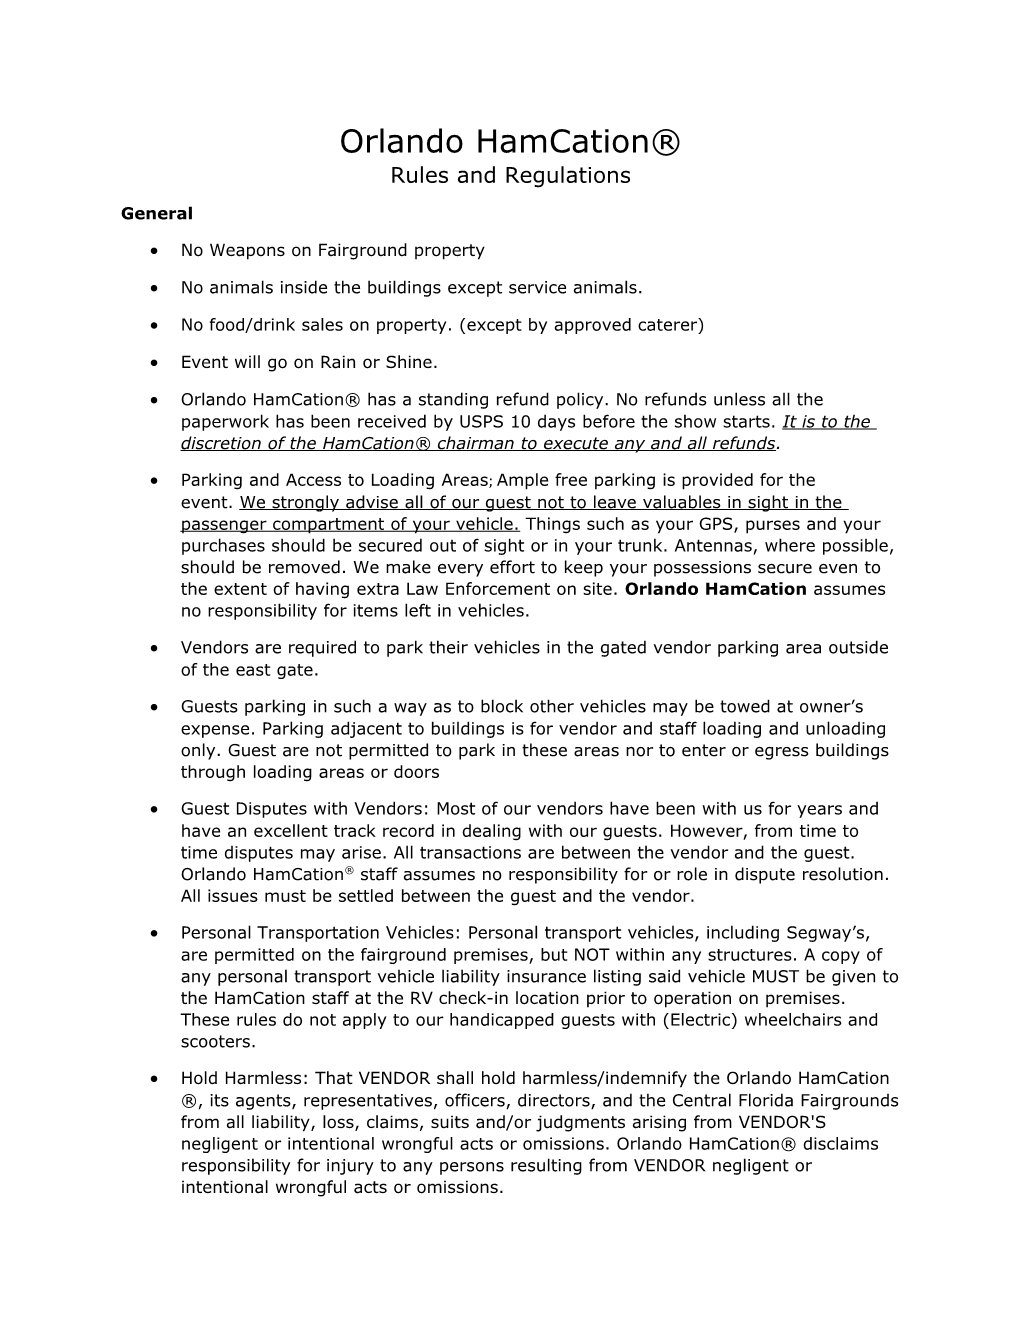 Orlando Hamcation Rules and Regulations